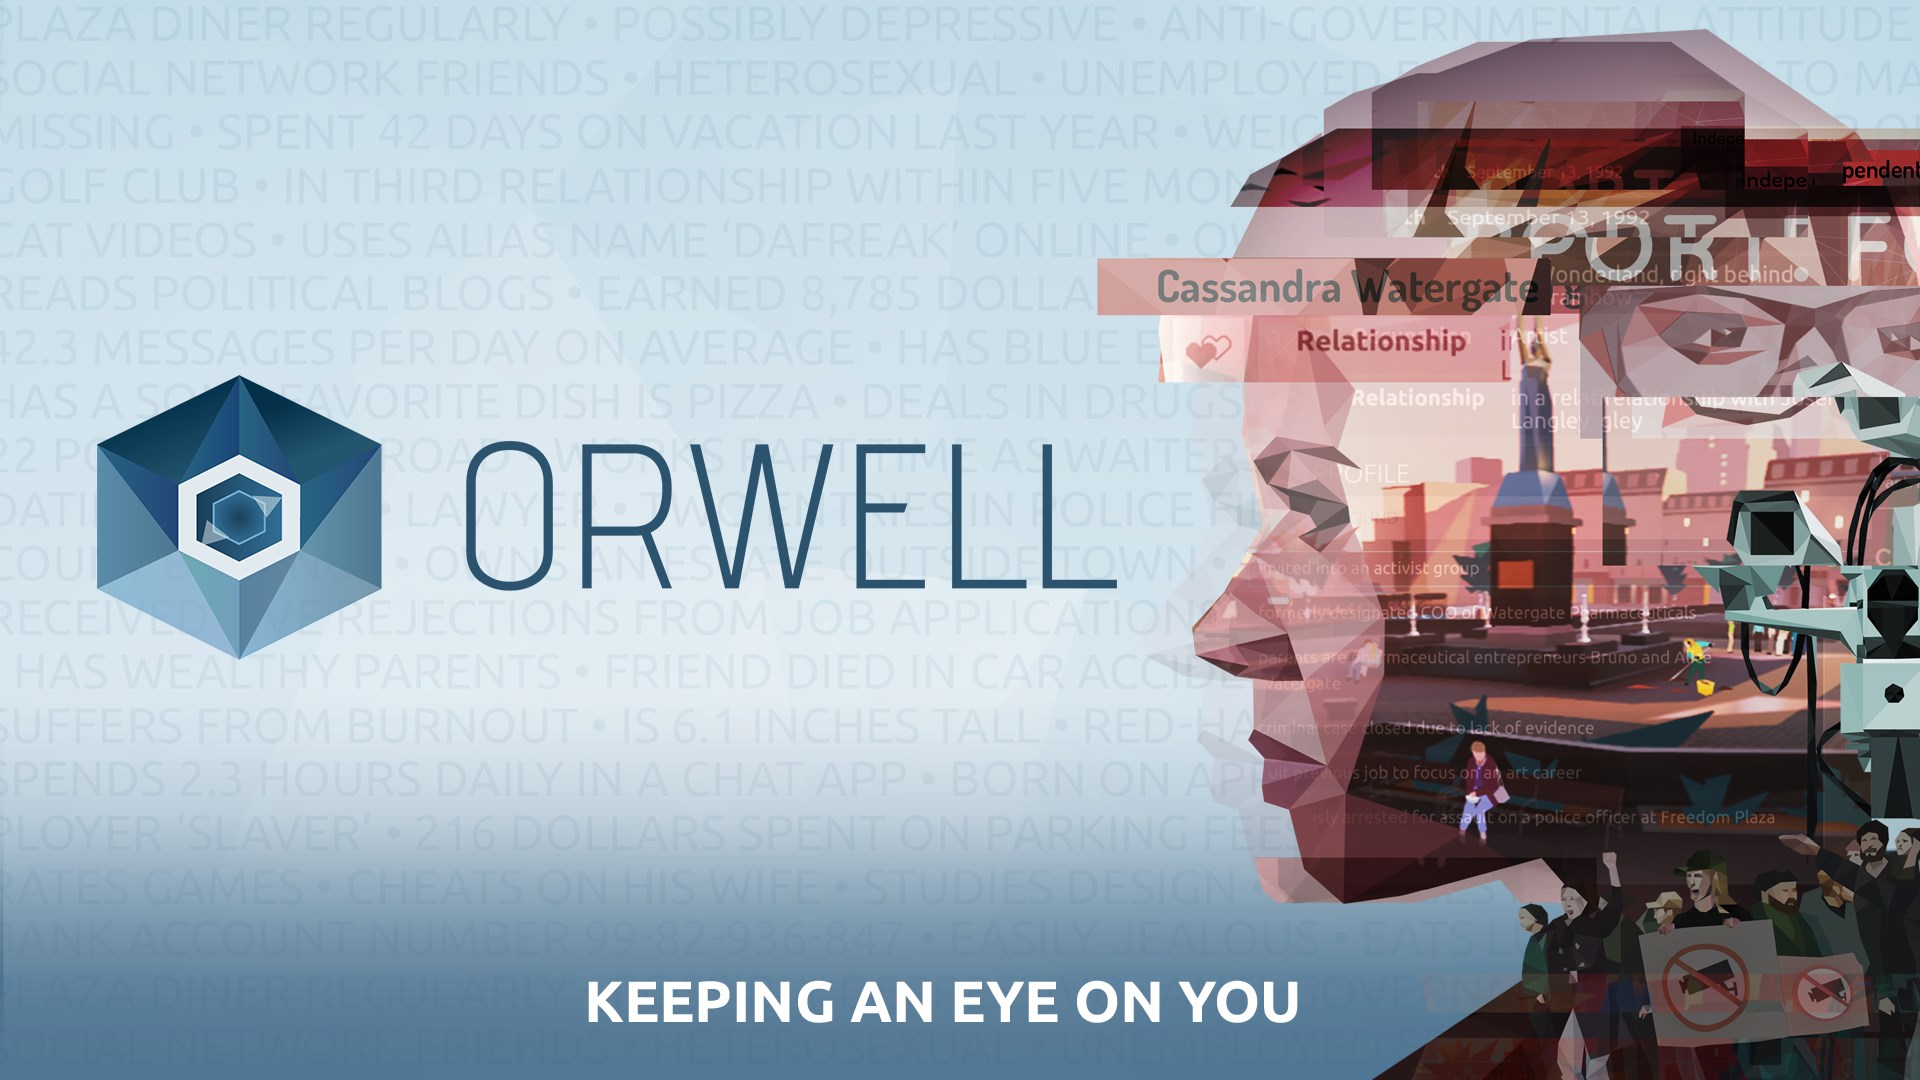 Orwell keeping an eye on you finish work